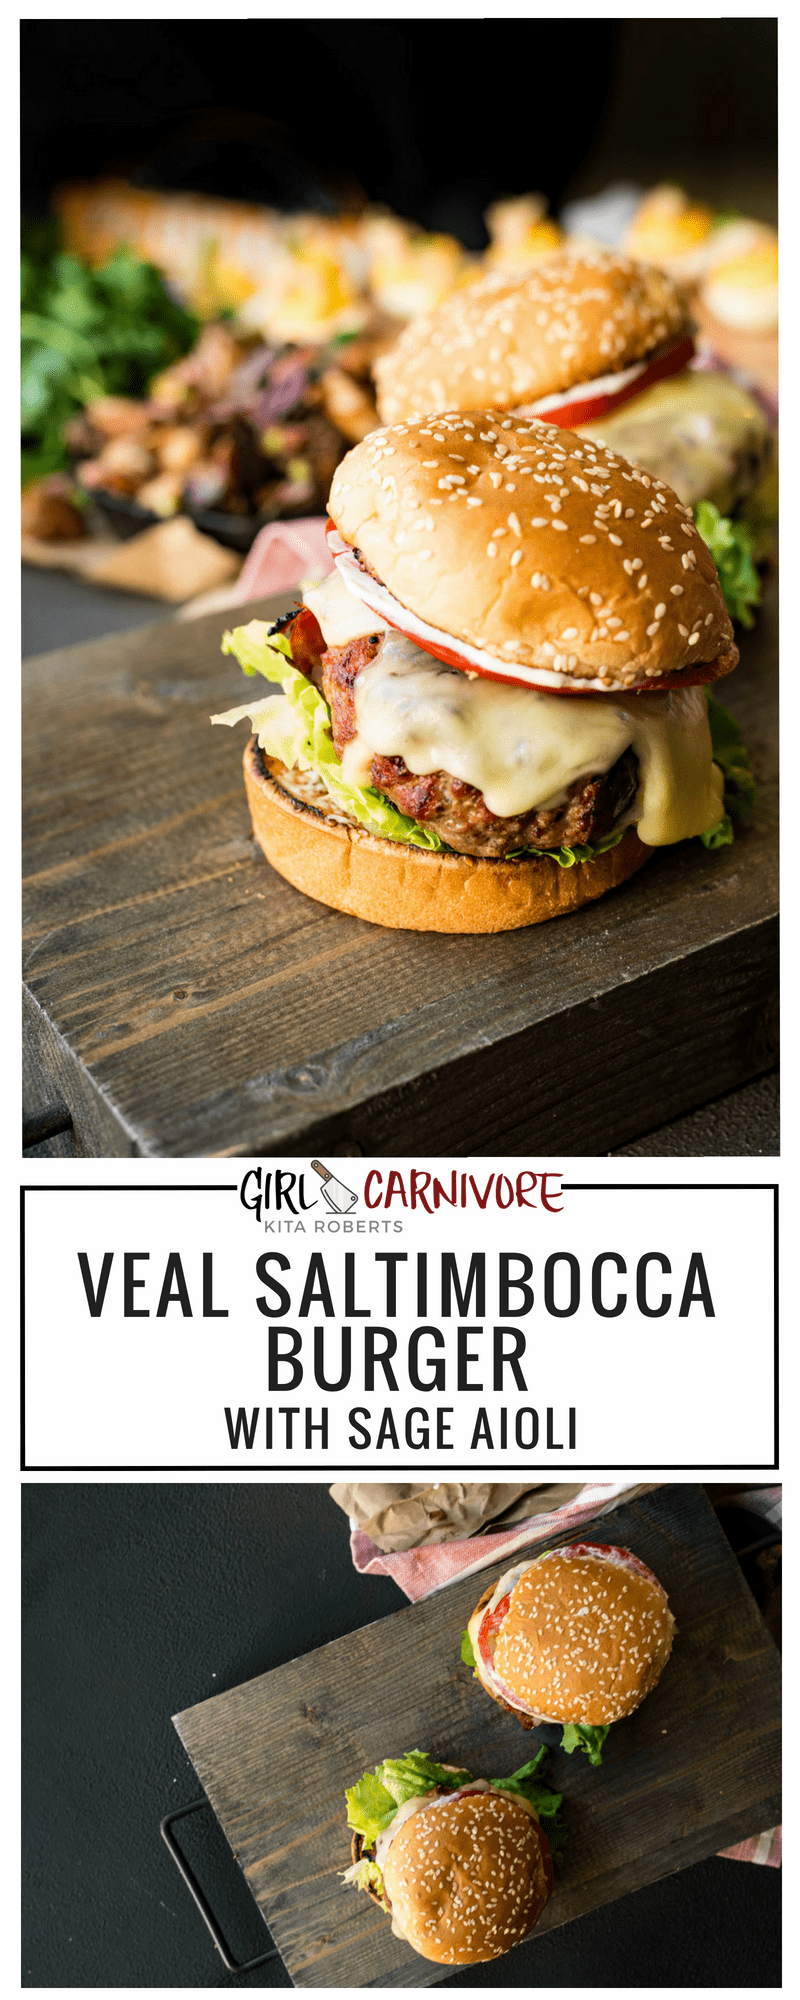 Veal Saltinbocca Burgers with Sage Aioli - Kita Roberts GirlCarnivore